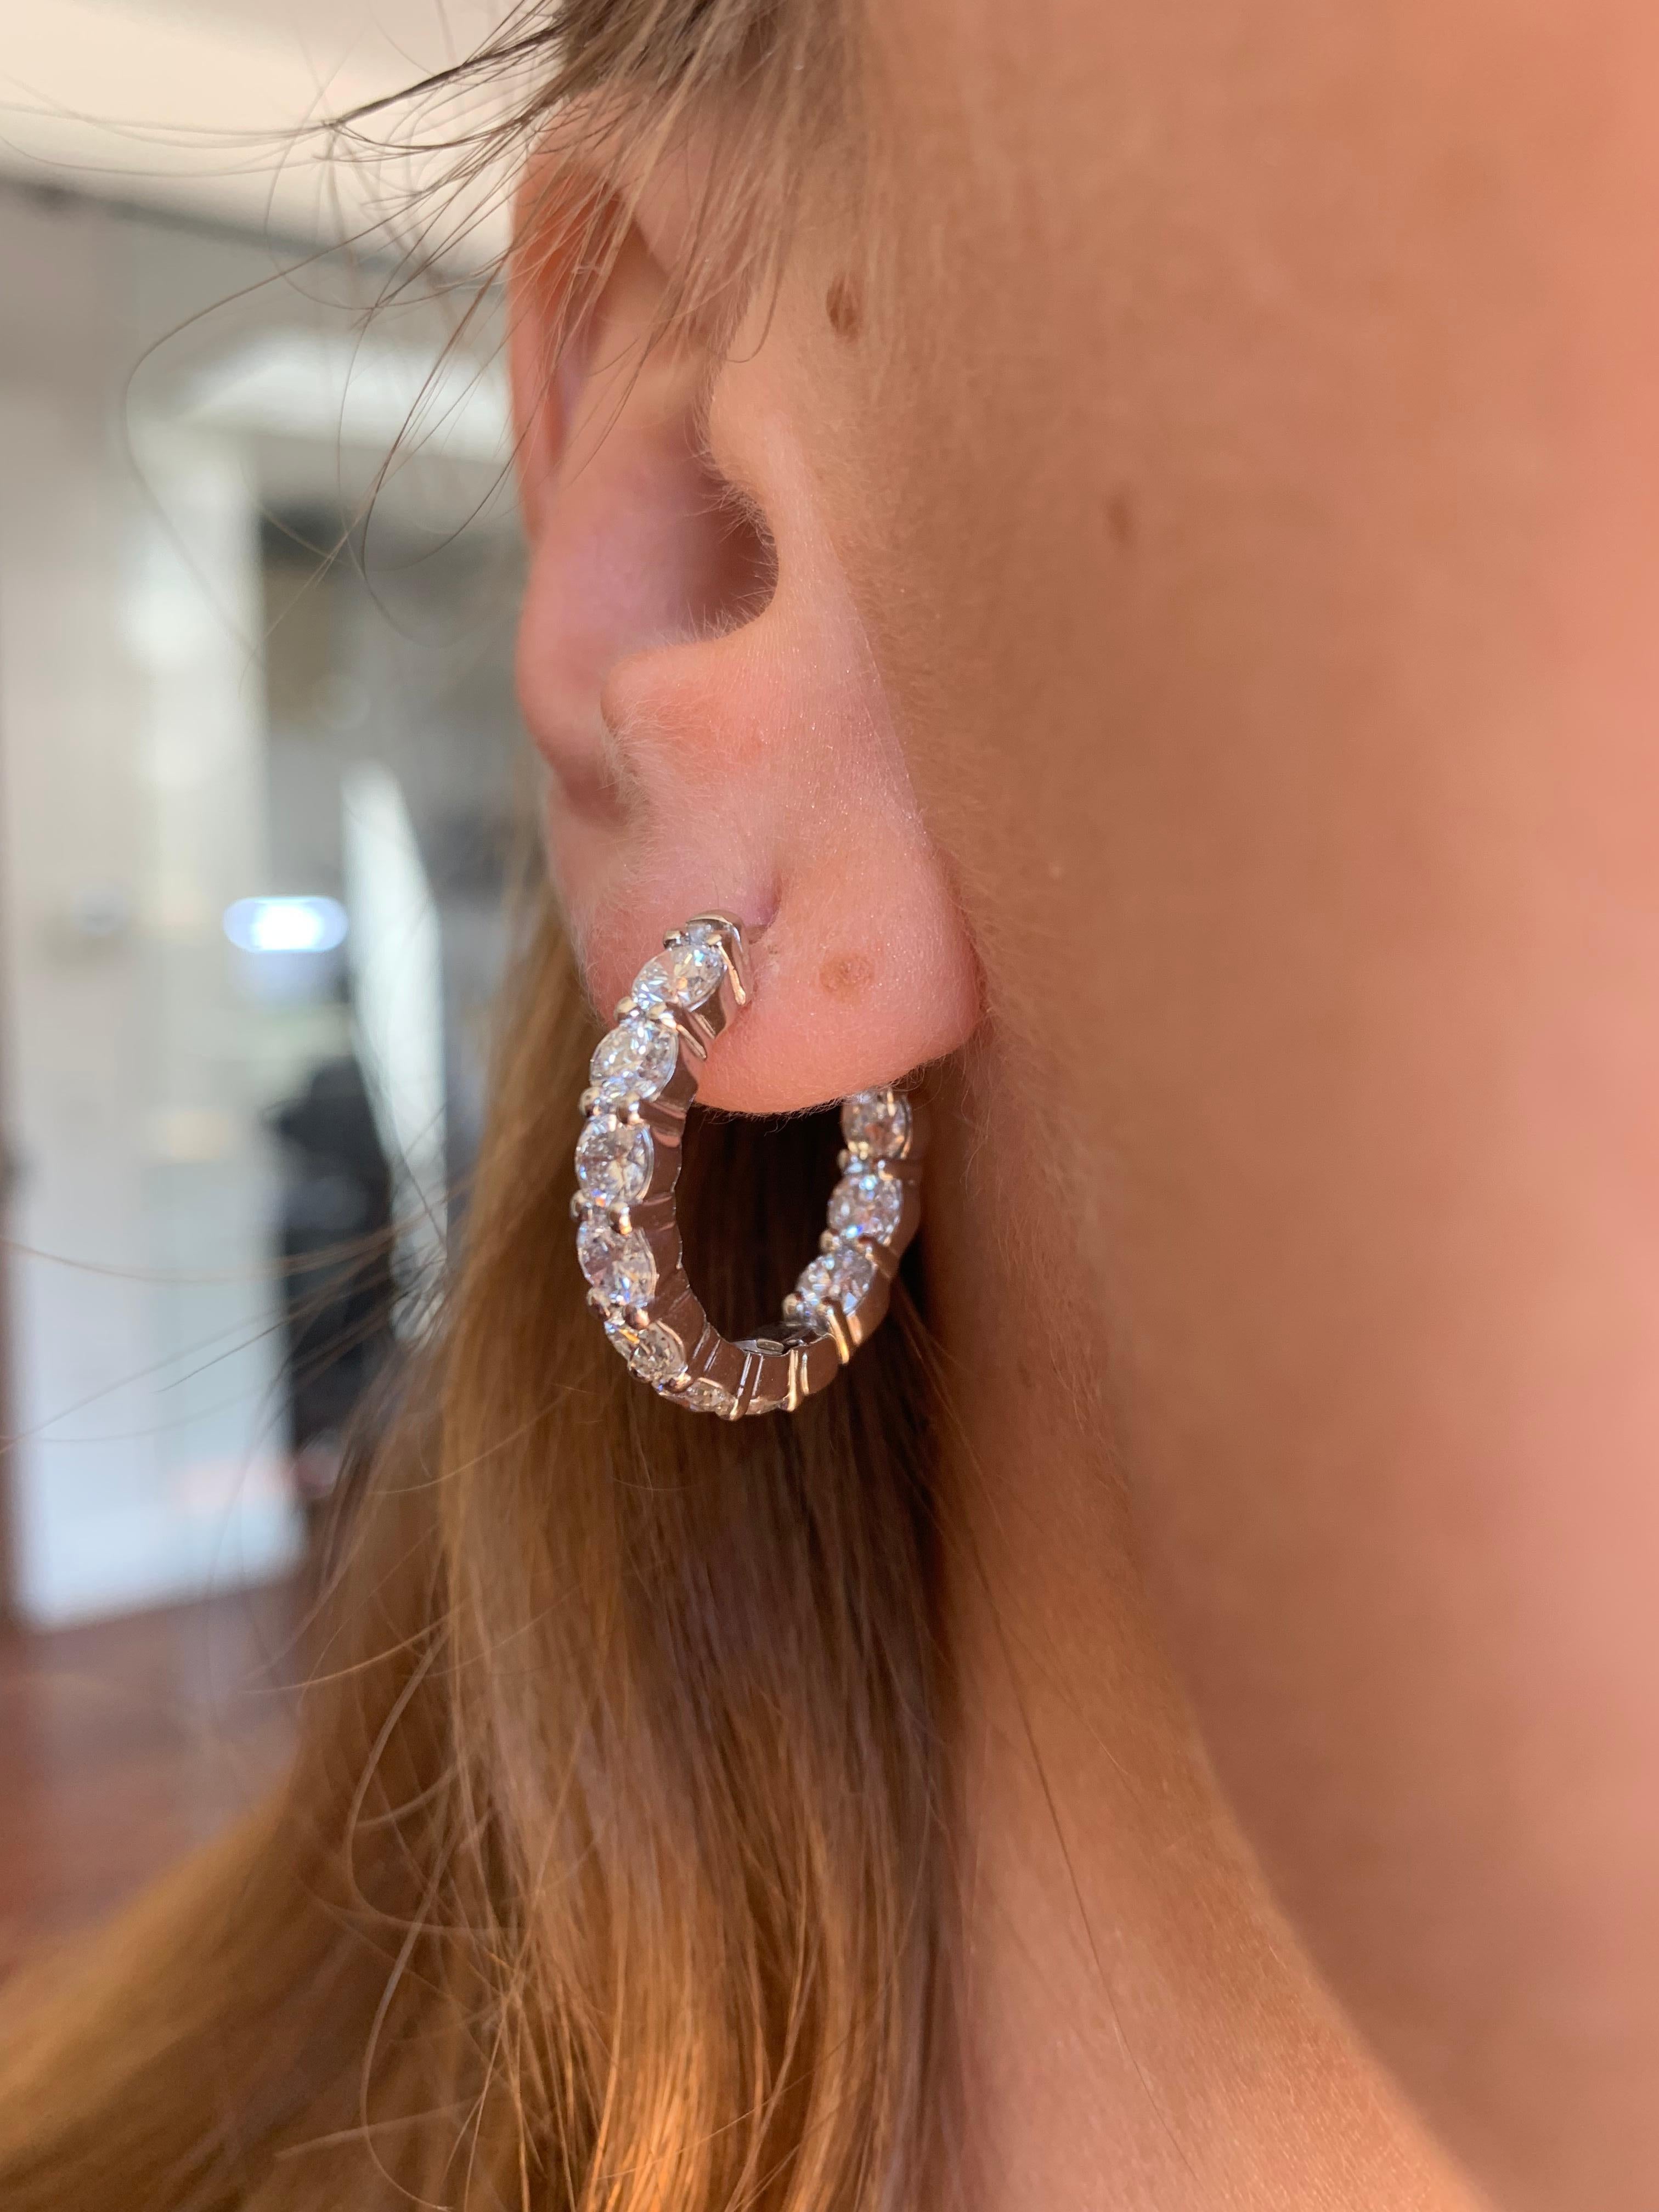 One 18K white gold diamond Hoop earrings features:
- 4.10 Carats of Round cut Diamonds. 
- 20 Round Cut Diamonds
- Each stone 0.20 Carats
- Oval Shaped
- 1